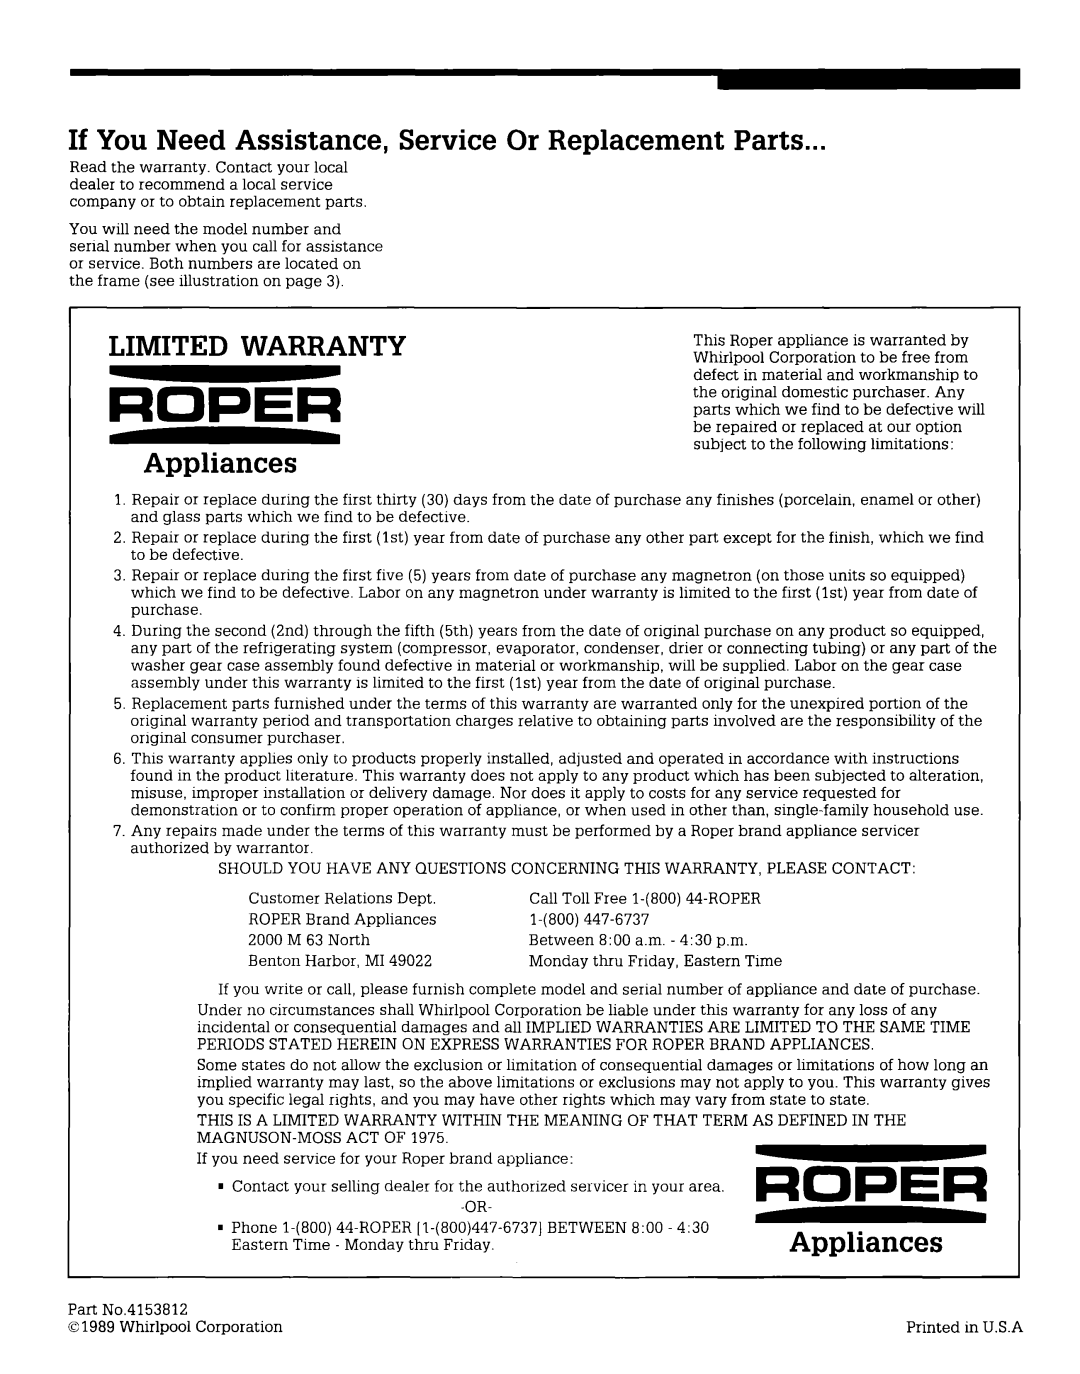 Roper KU155OV warranty Limited Warranty, Appliances 